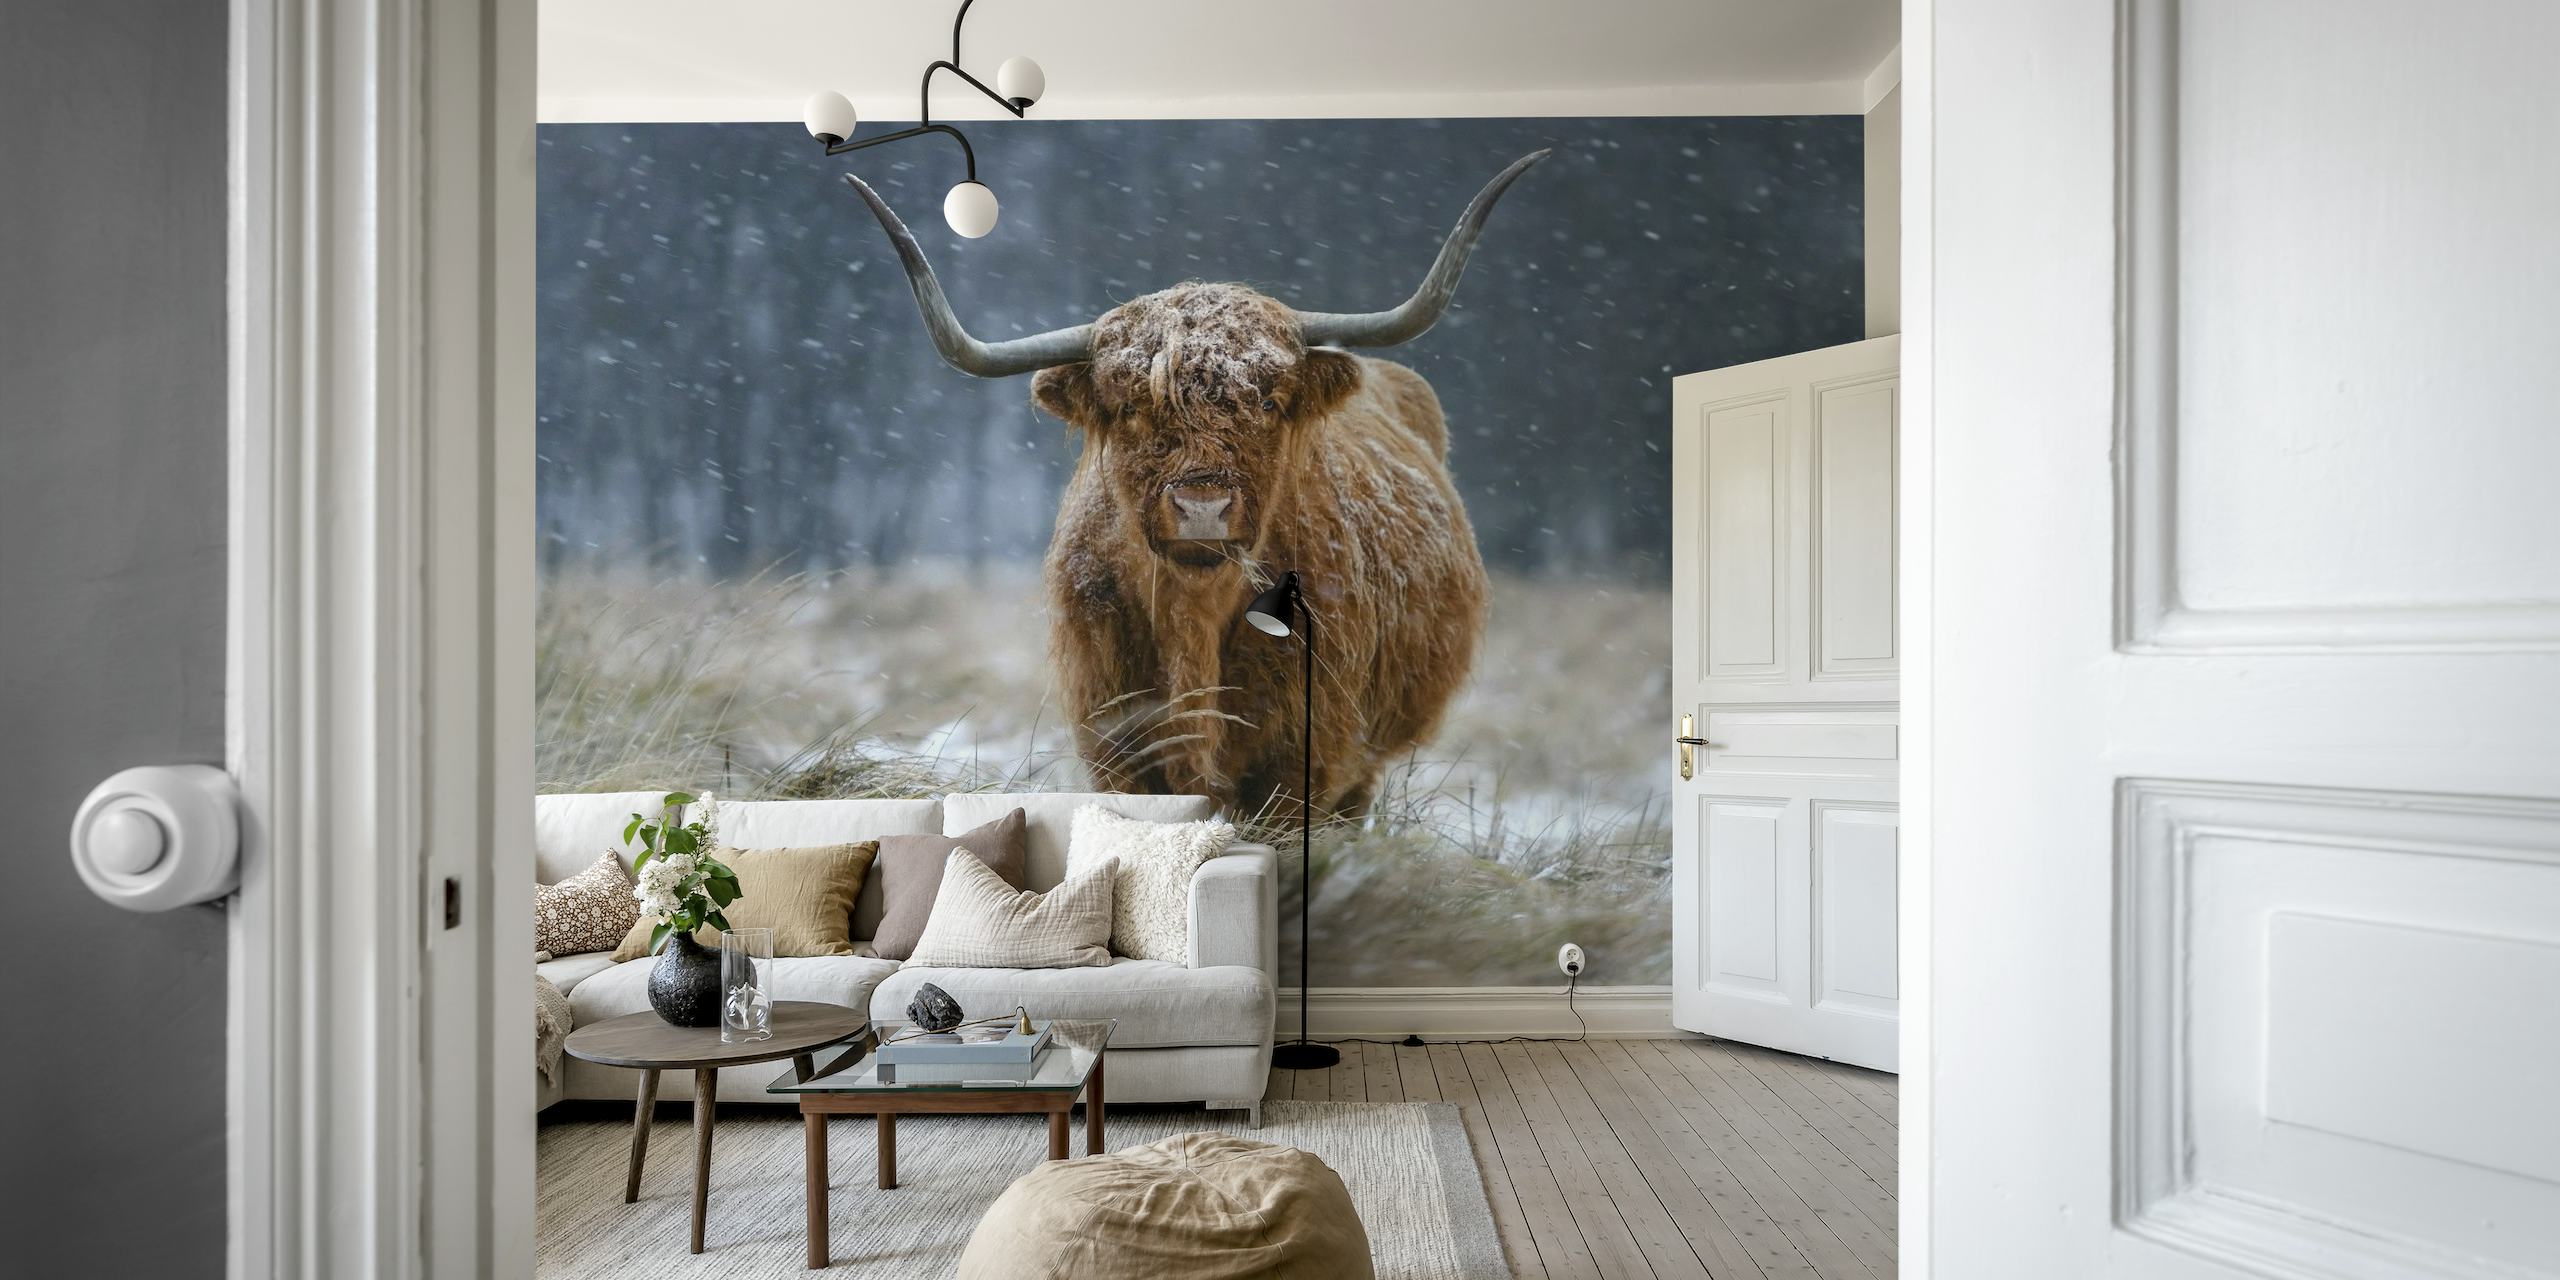 Snowy Highland cow wallpaper